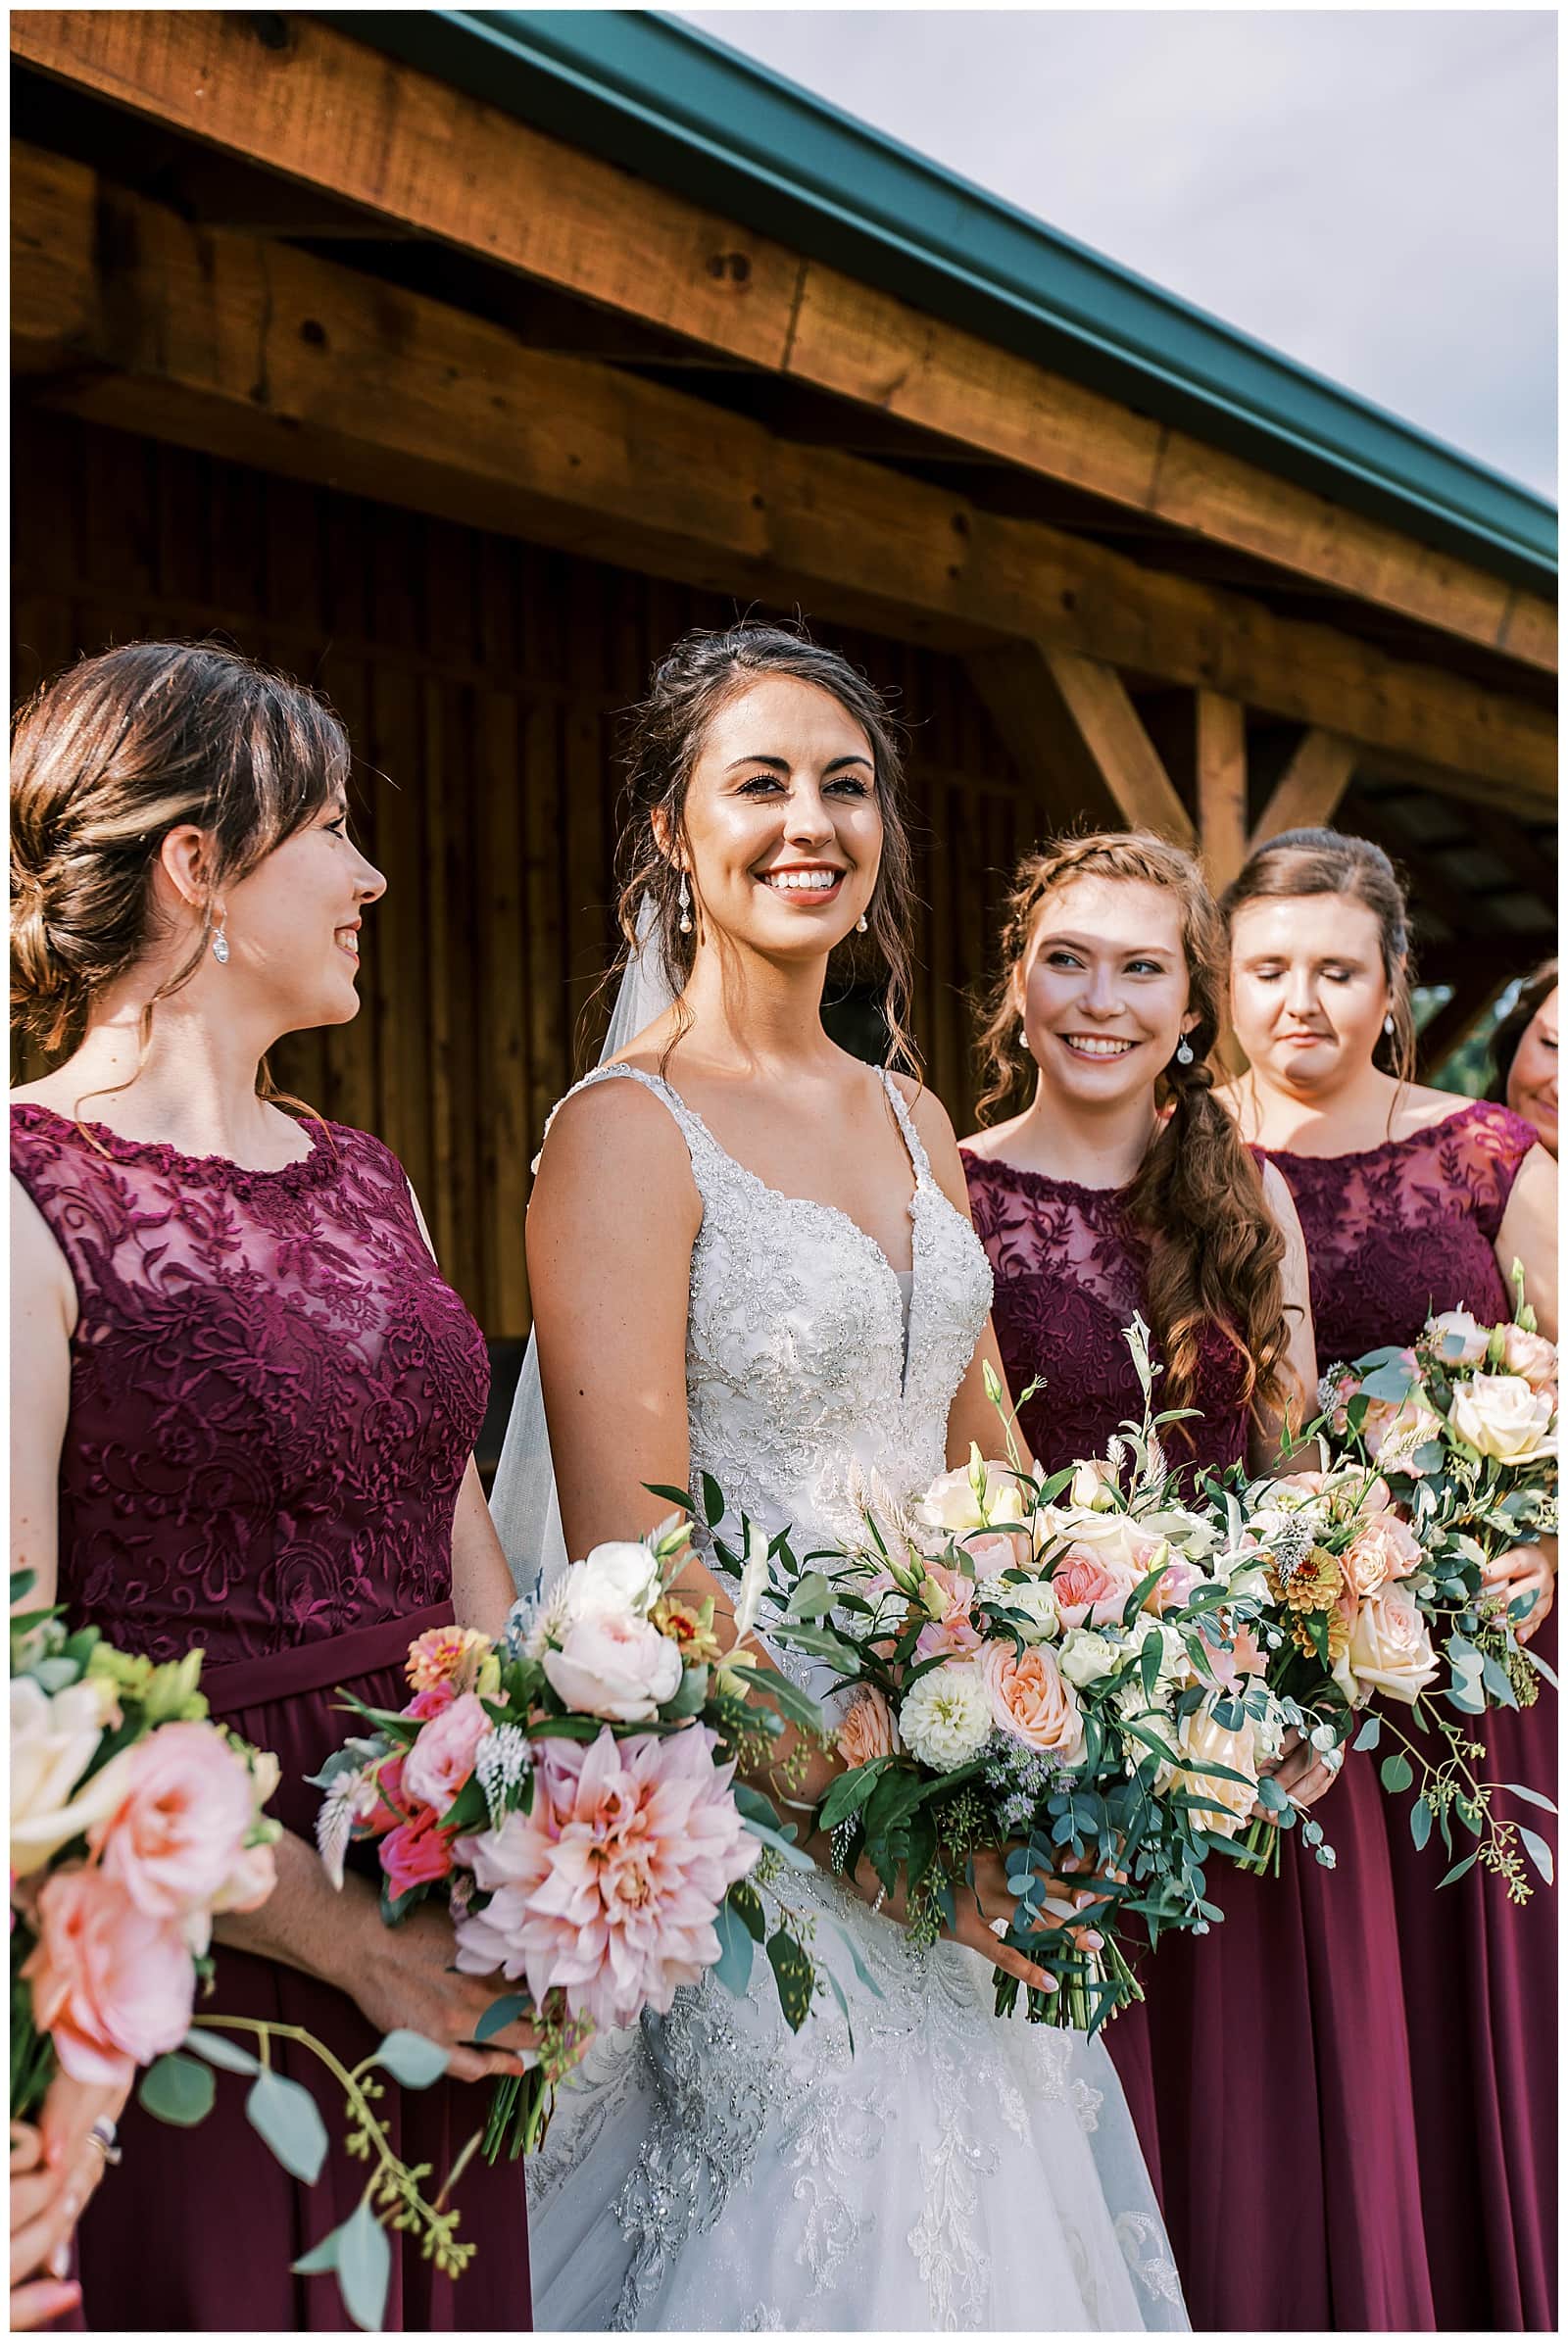 Danielle-Defayette-Photography-Middle-Fork-Barn-Wedding-VA-2020_0032.jpg